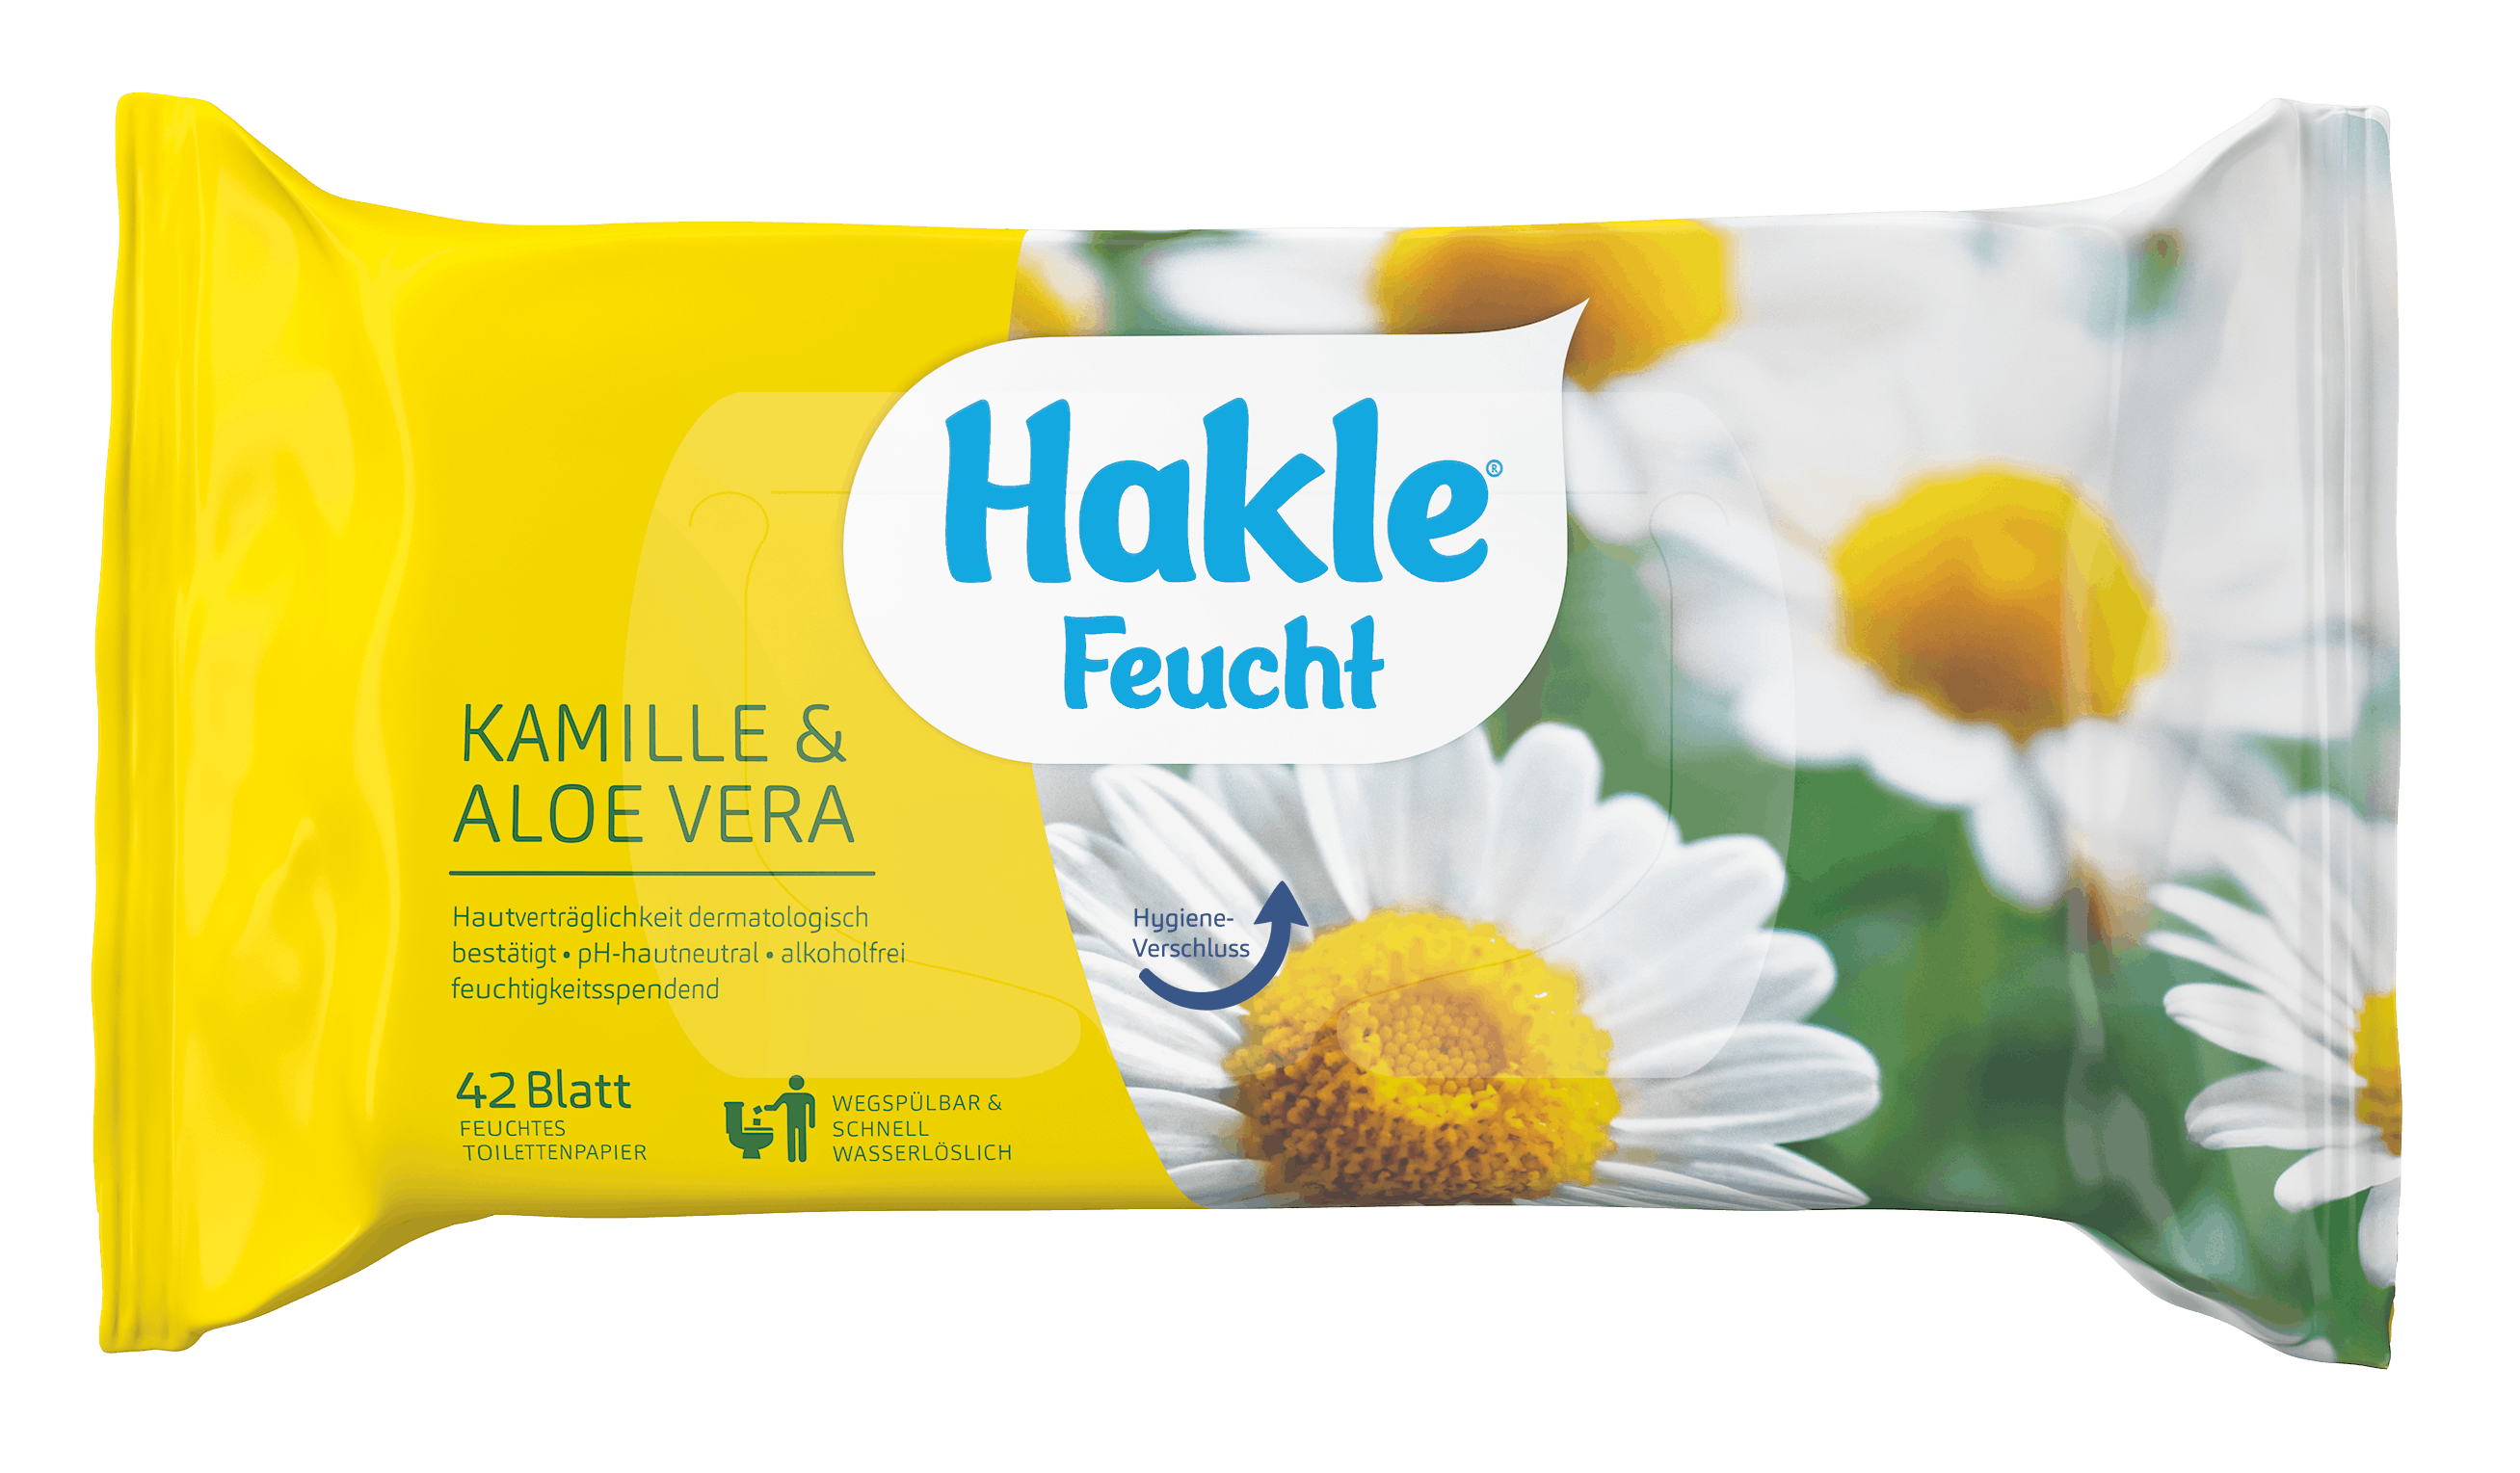 Hakle Feucht Kamille & Aloe Vera 42 Blatt Feuchtes Toilettenpapier Nachfüller 